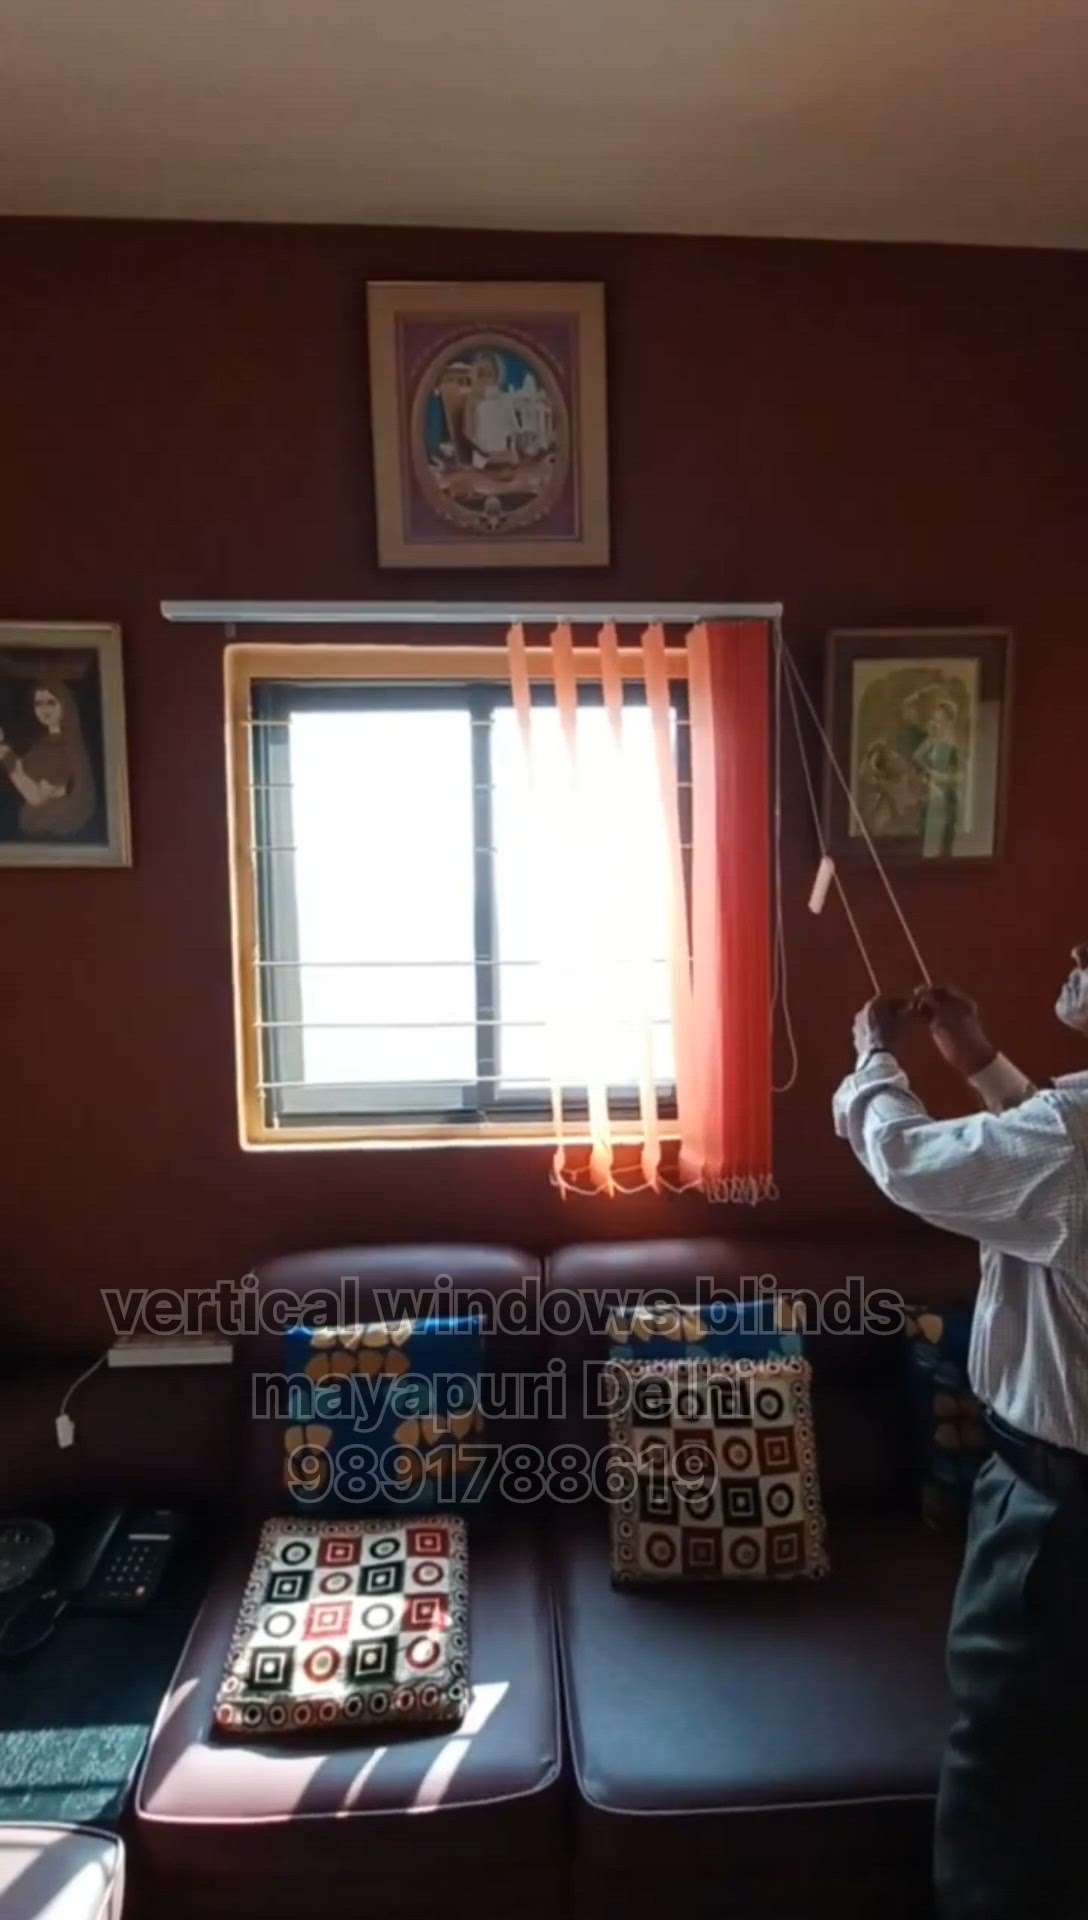 All About  #vertical blinds & roller  #blinds  #installation mayapuri Delhi 
9891788619